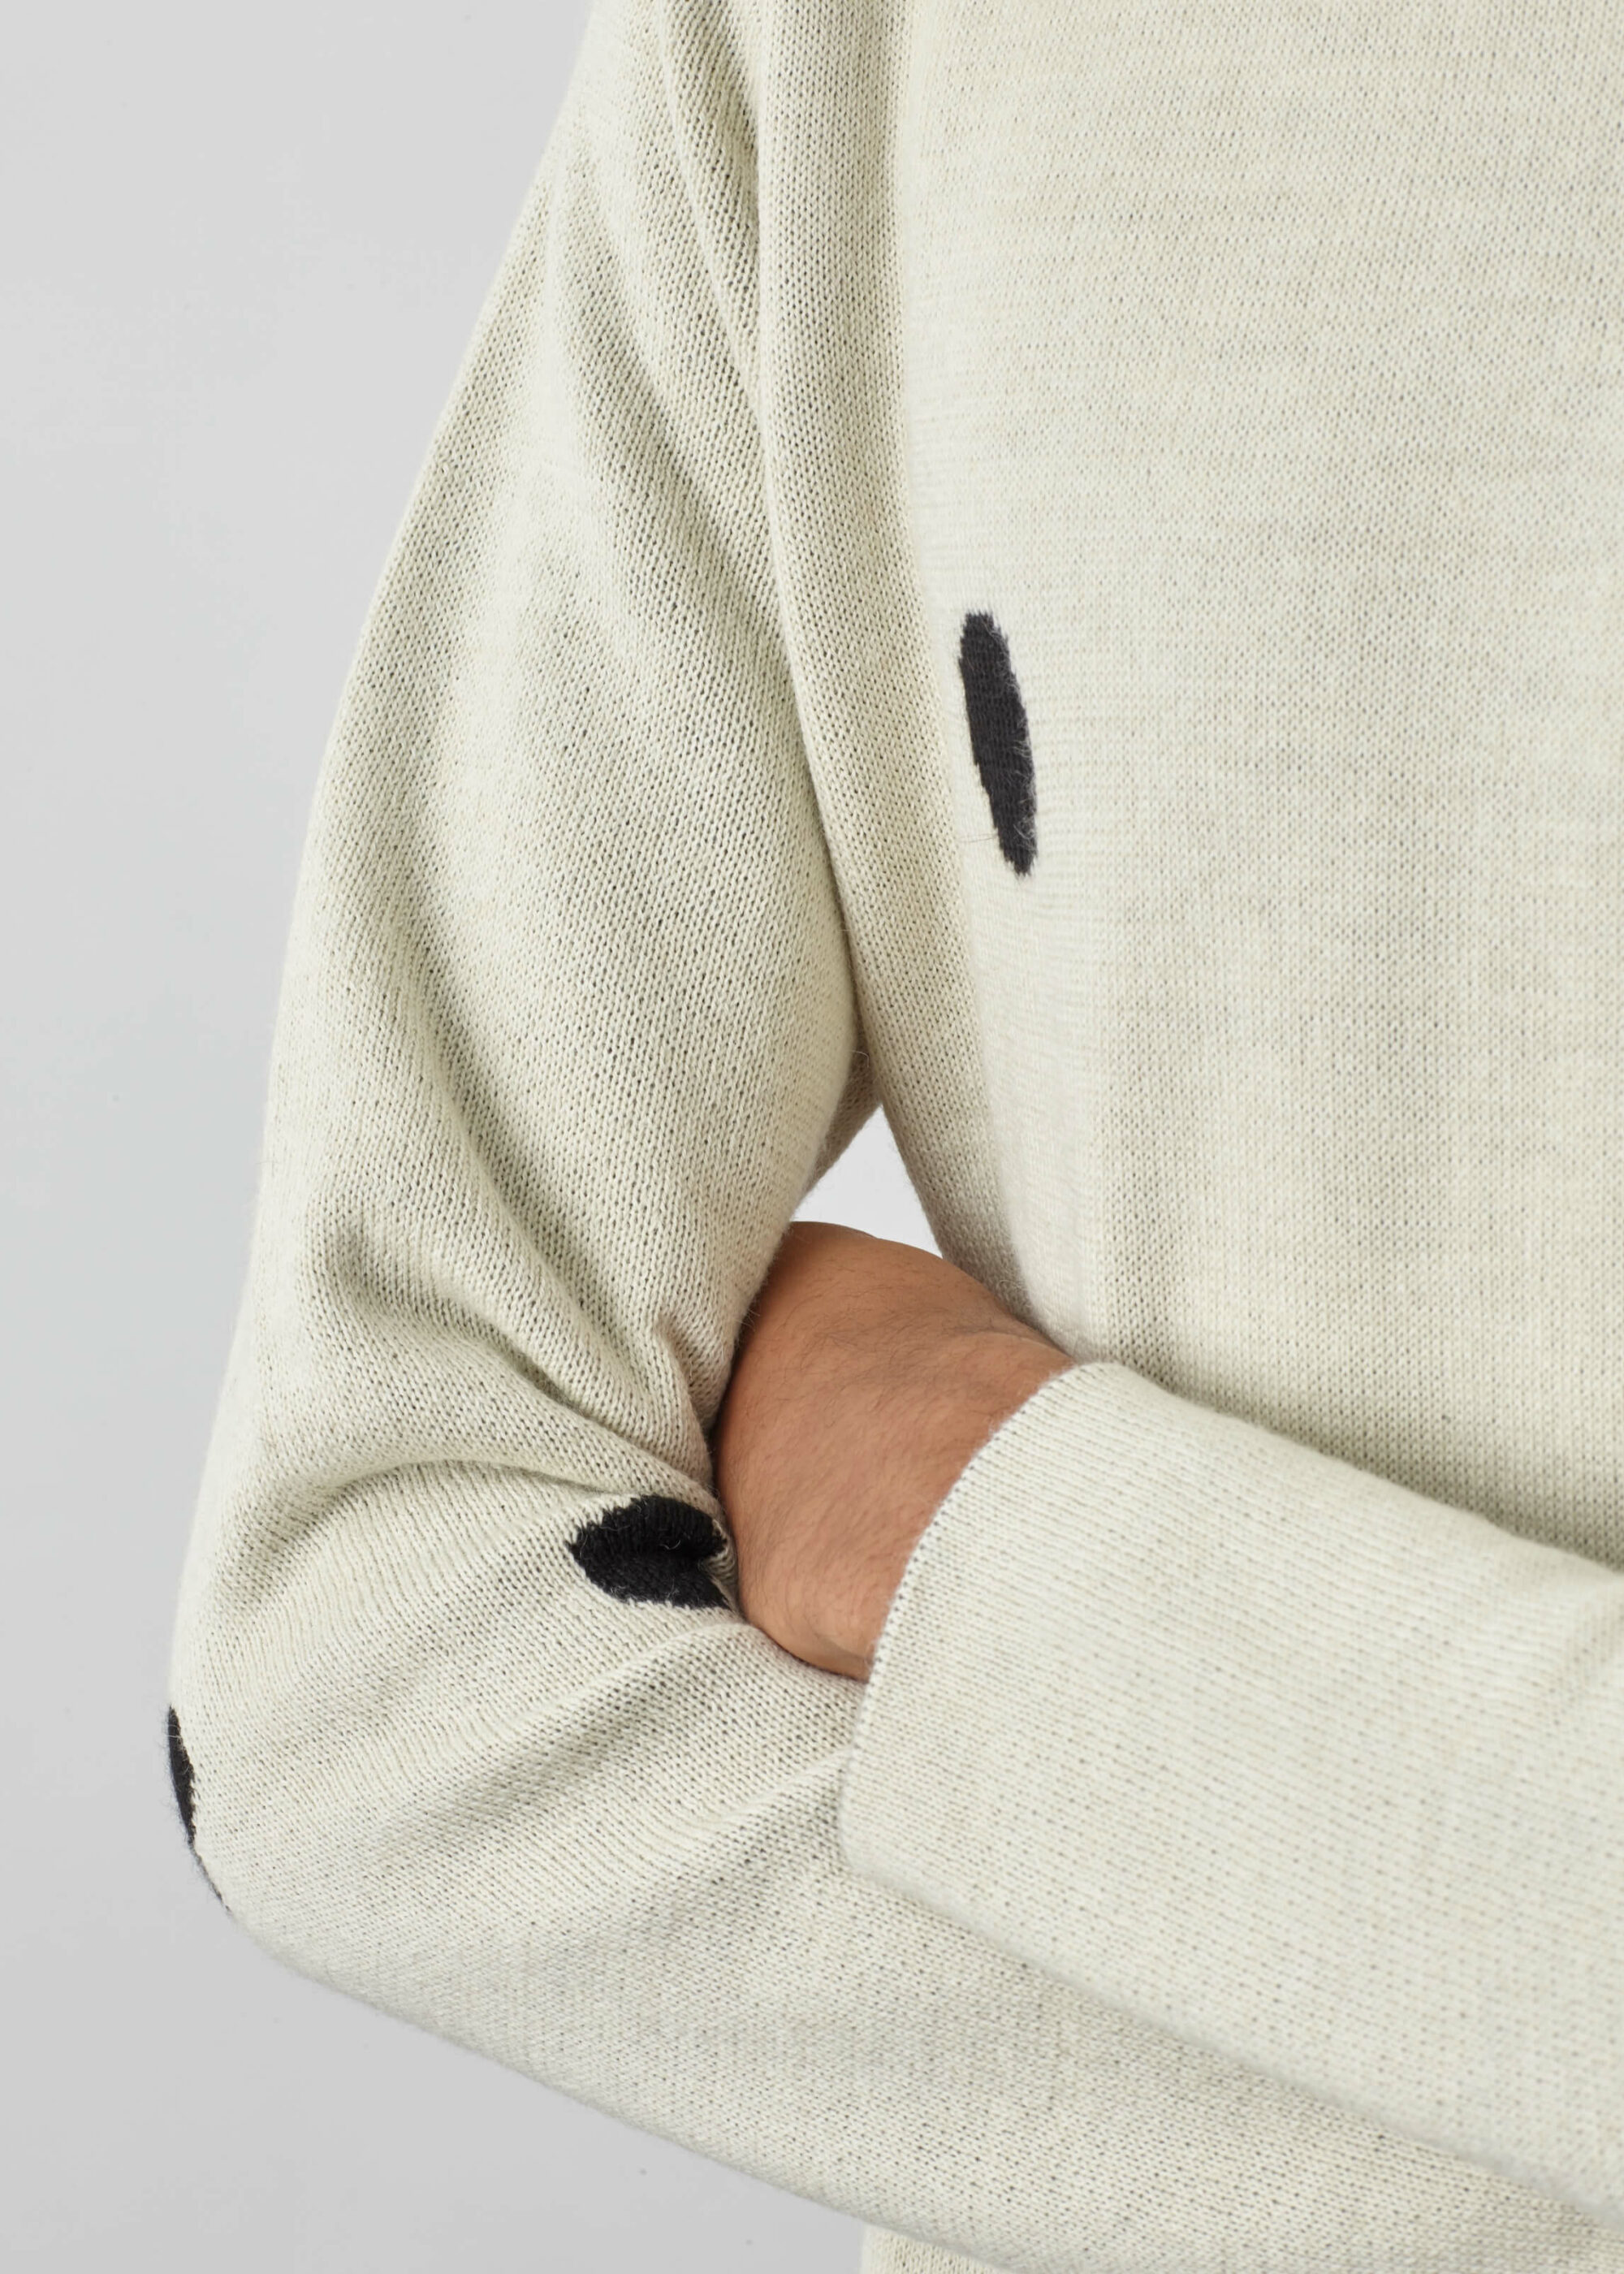 Product image for »Ermine« Jacquard Sweater Baby Alpaca | Ecru Black